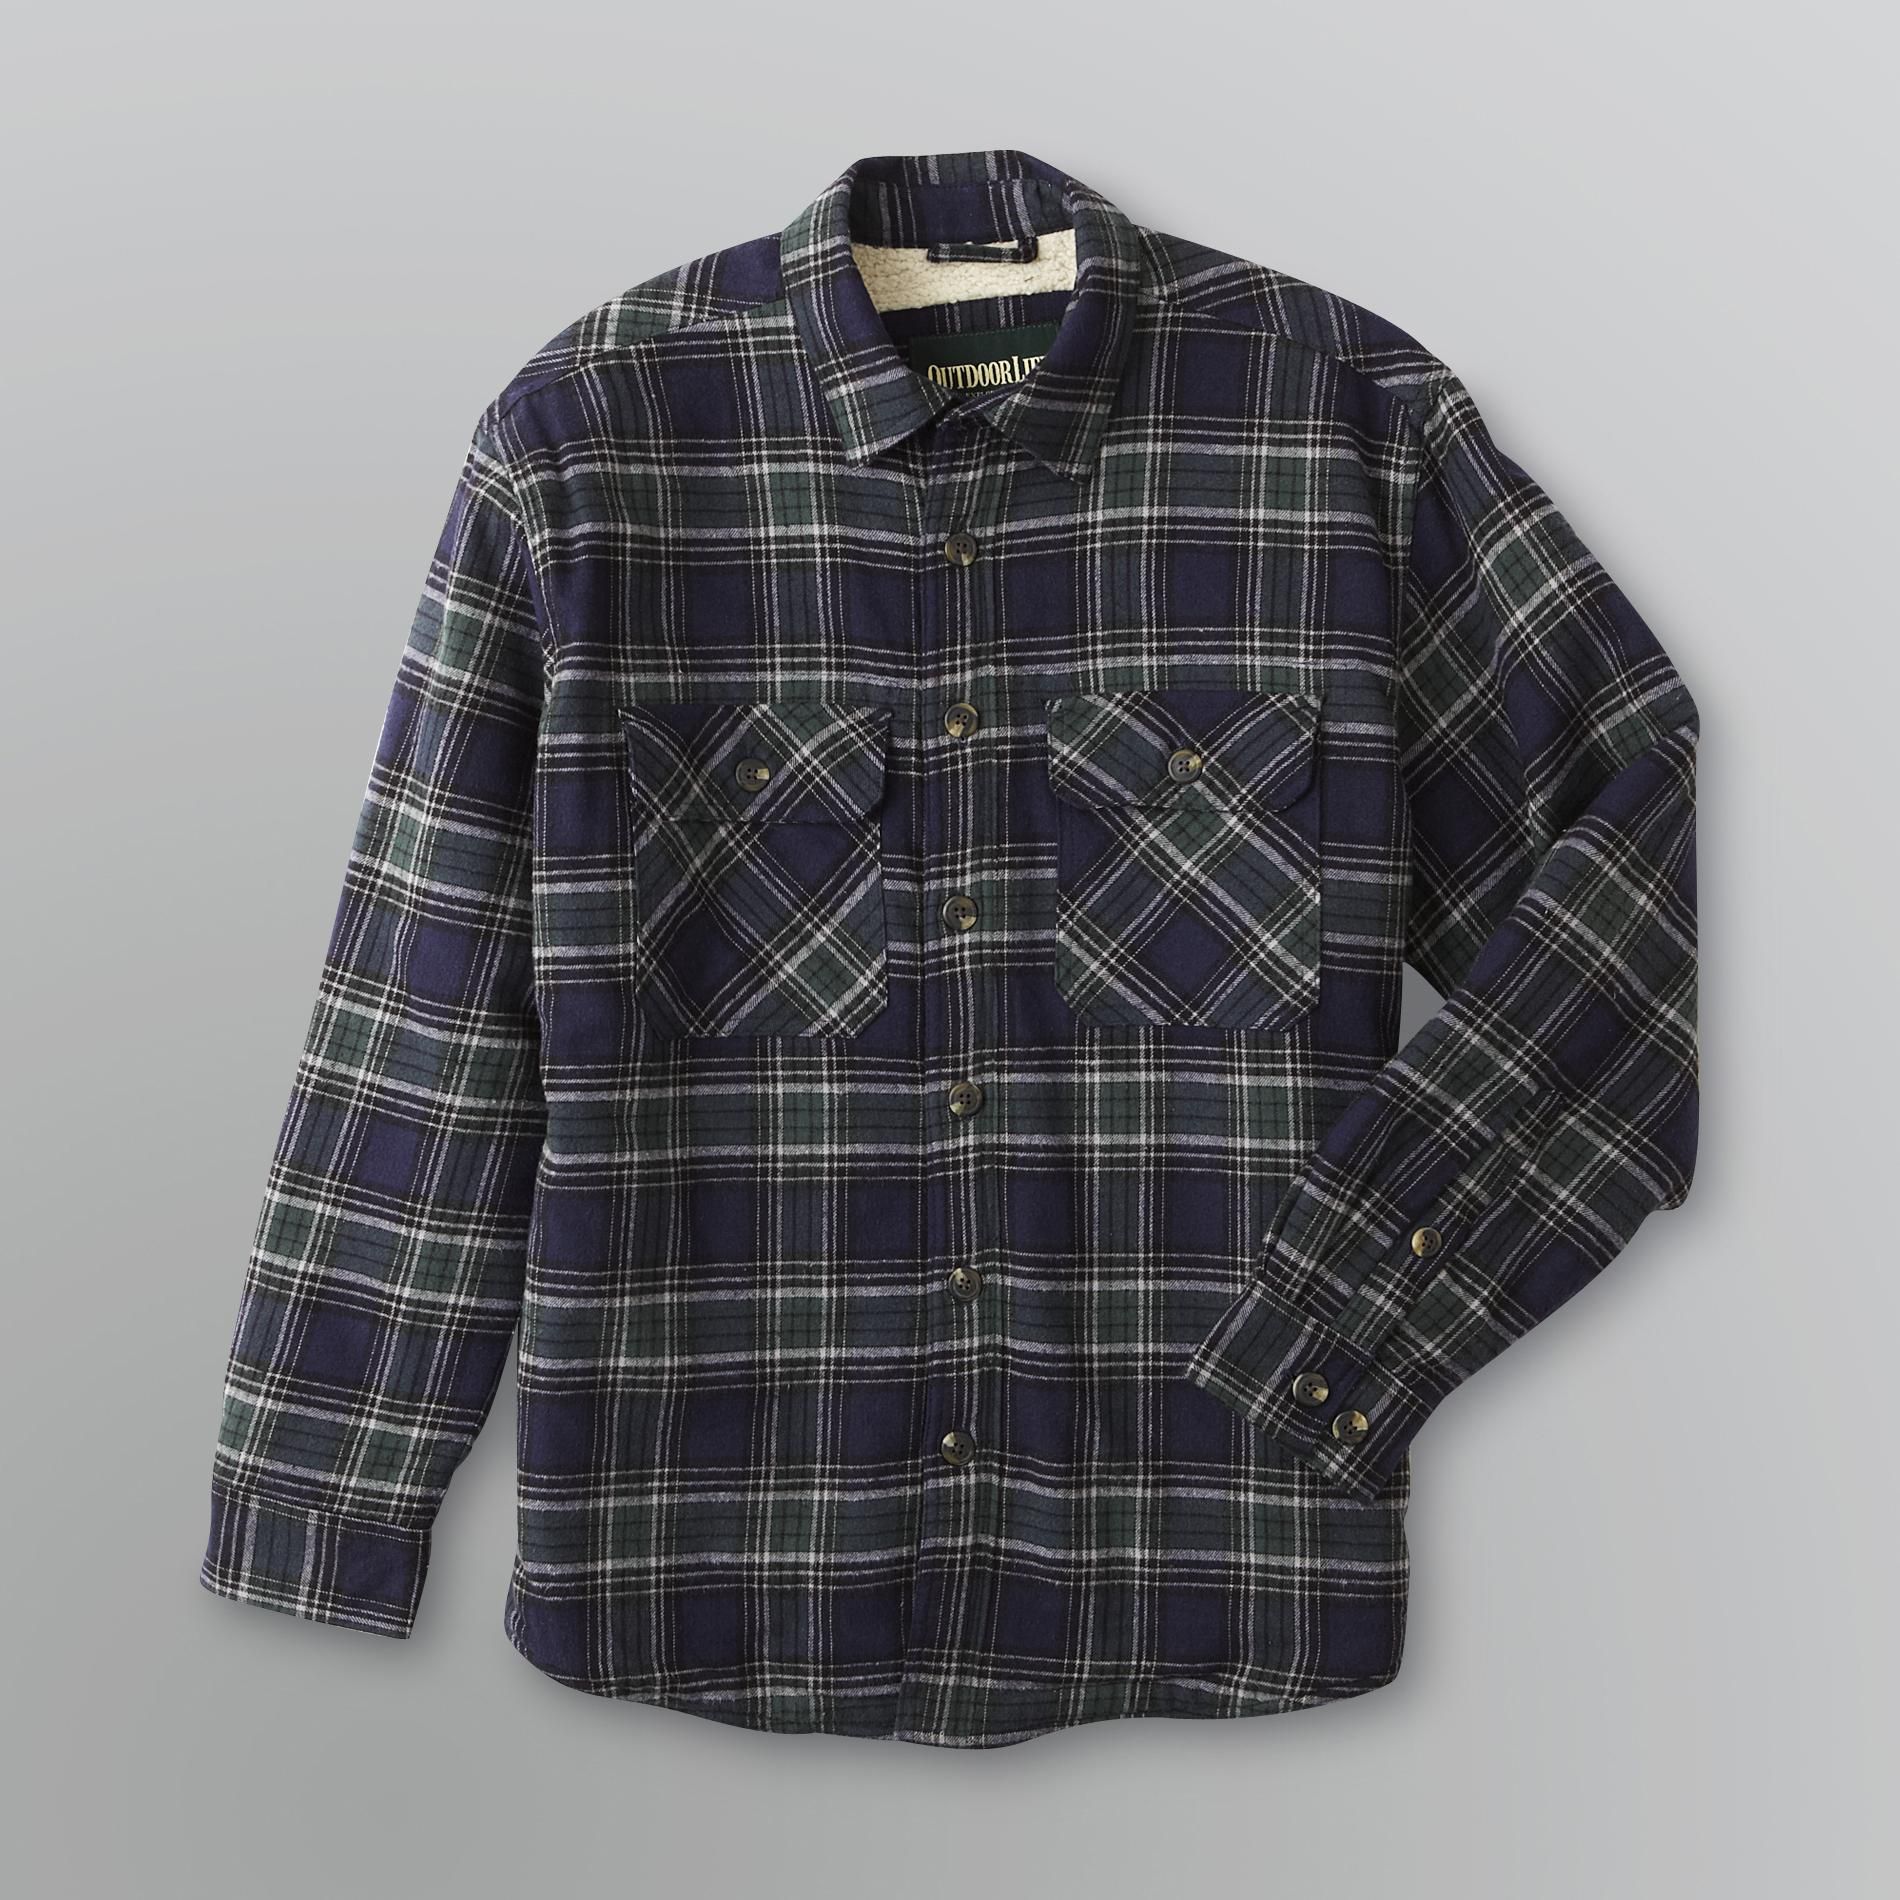 Outdoor Life Men's Plaid Flannel Shirt-Jacket